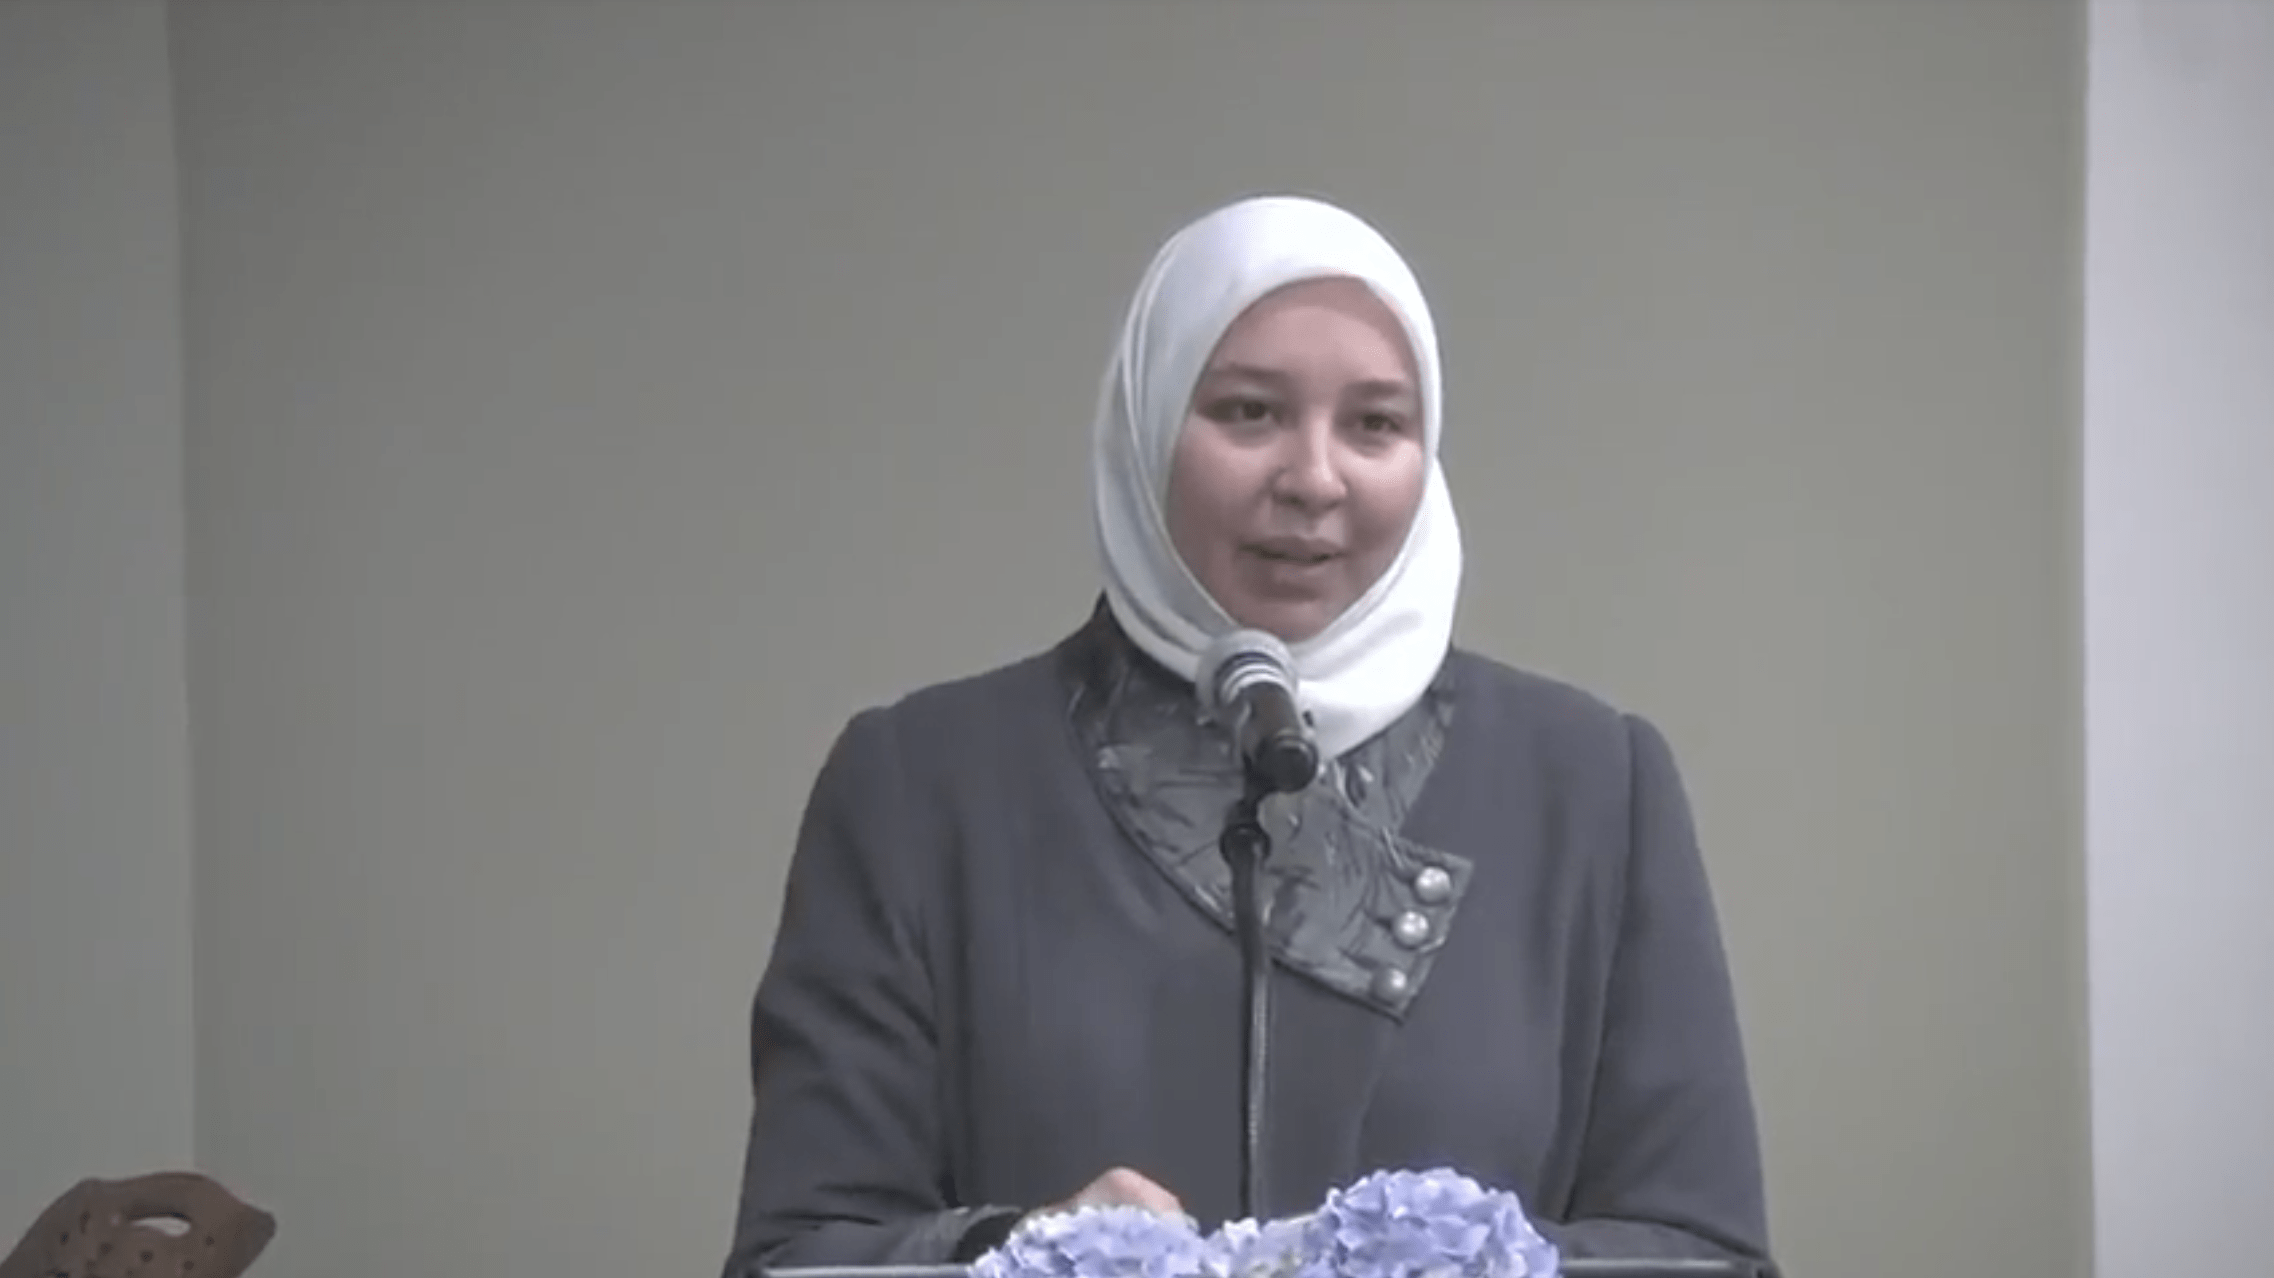 Rania Awaad – In Honor of Our Teachers